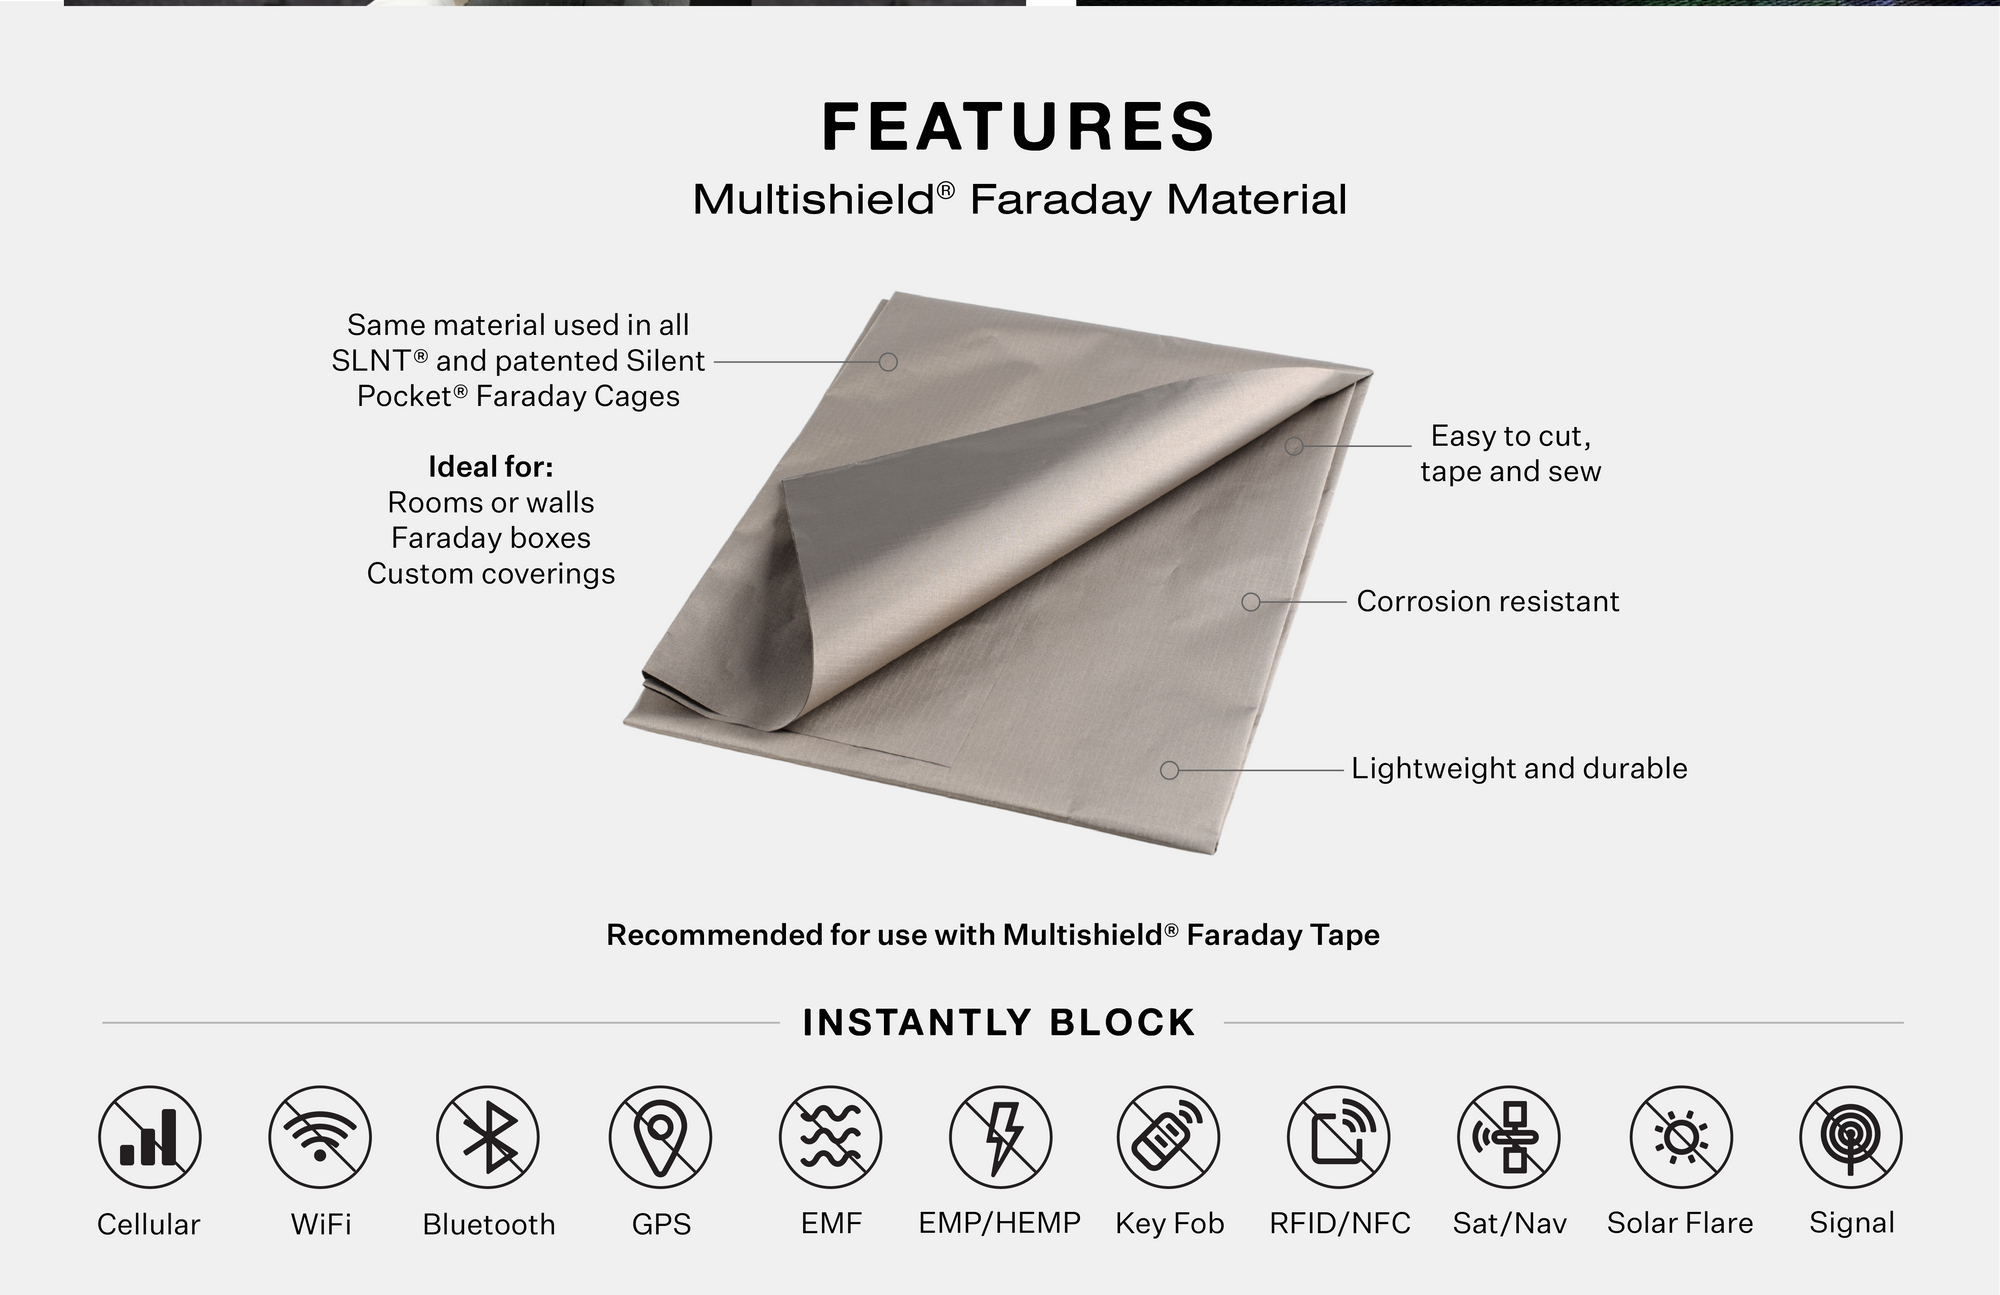 Multishield Faraday material